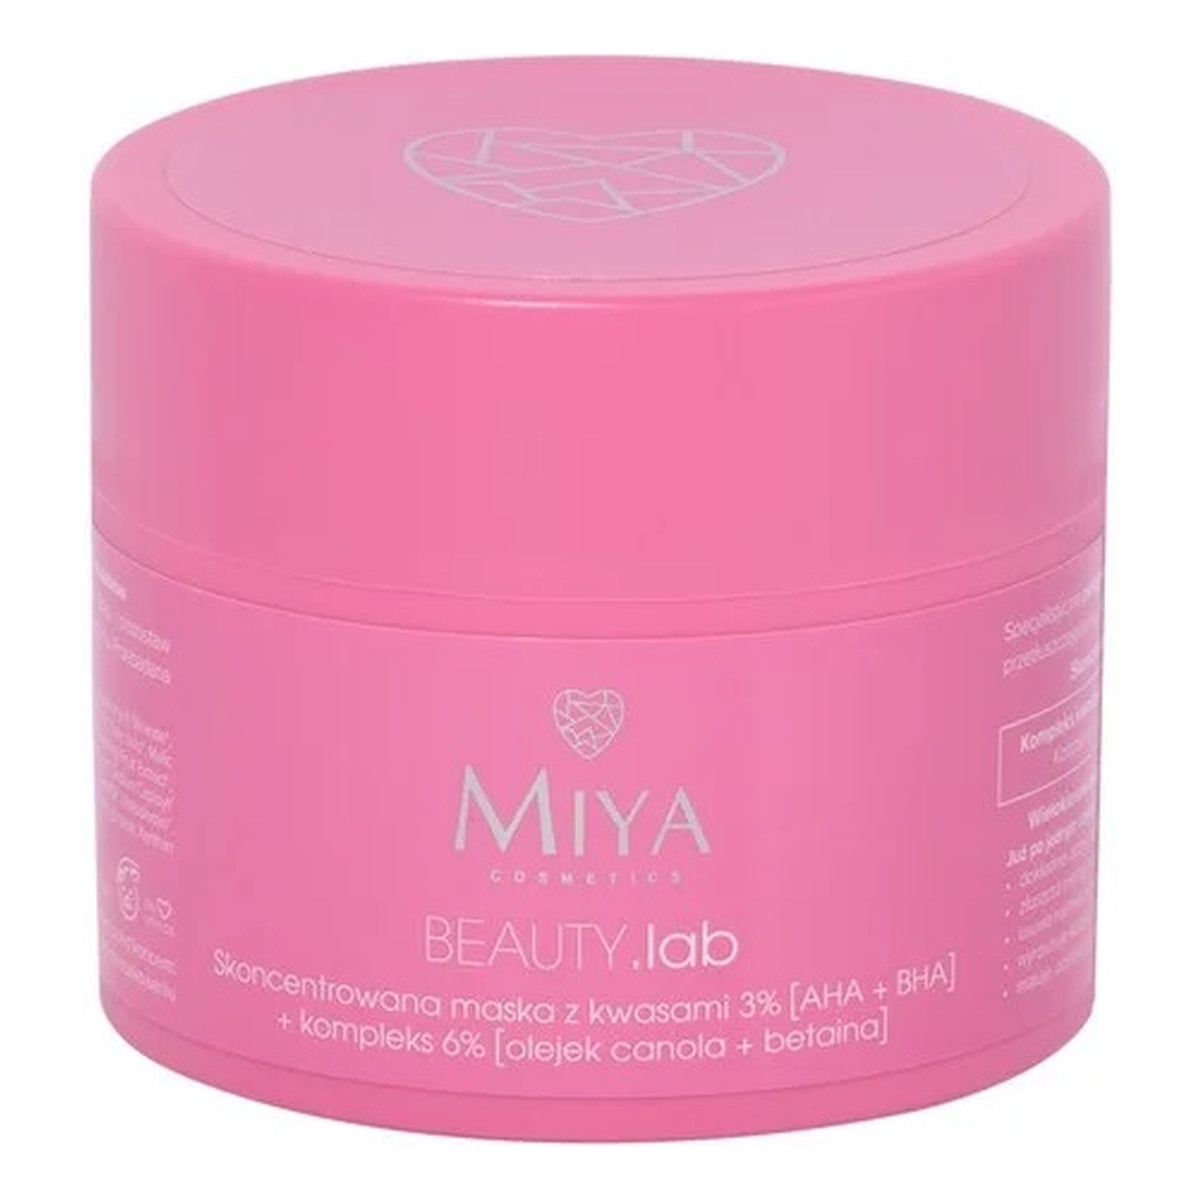 Miya Cosmetics Beauty lab skoncentrowana maska z kwasami 3% [aha + bha] + kompleks 6% [olejek canola + betaina] 50g